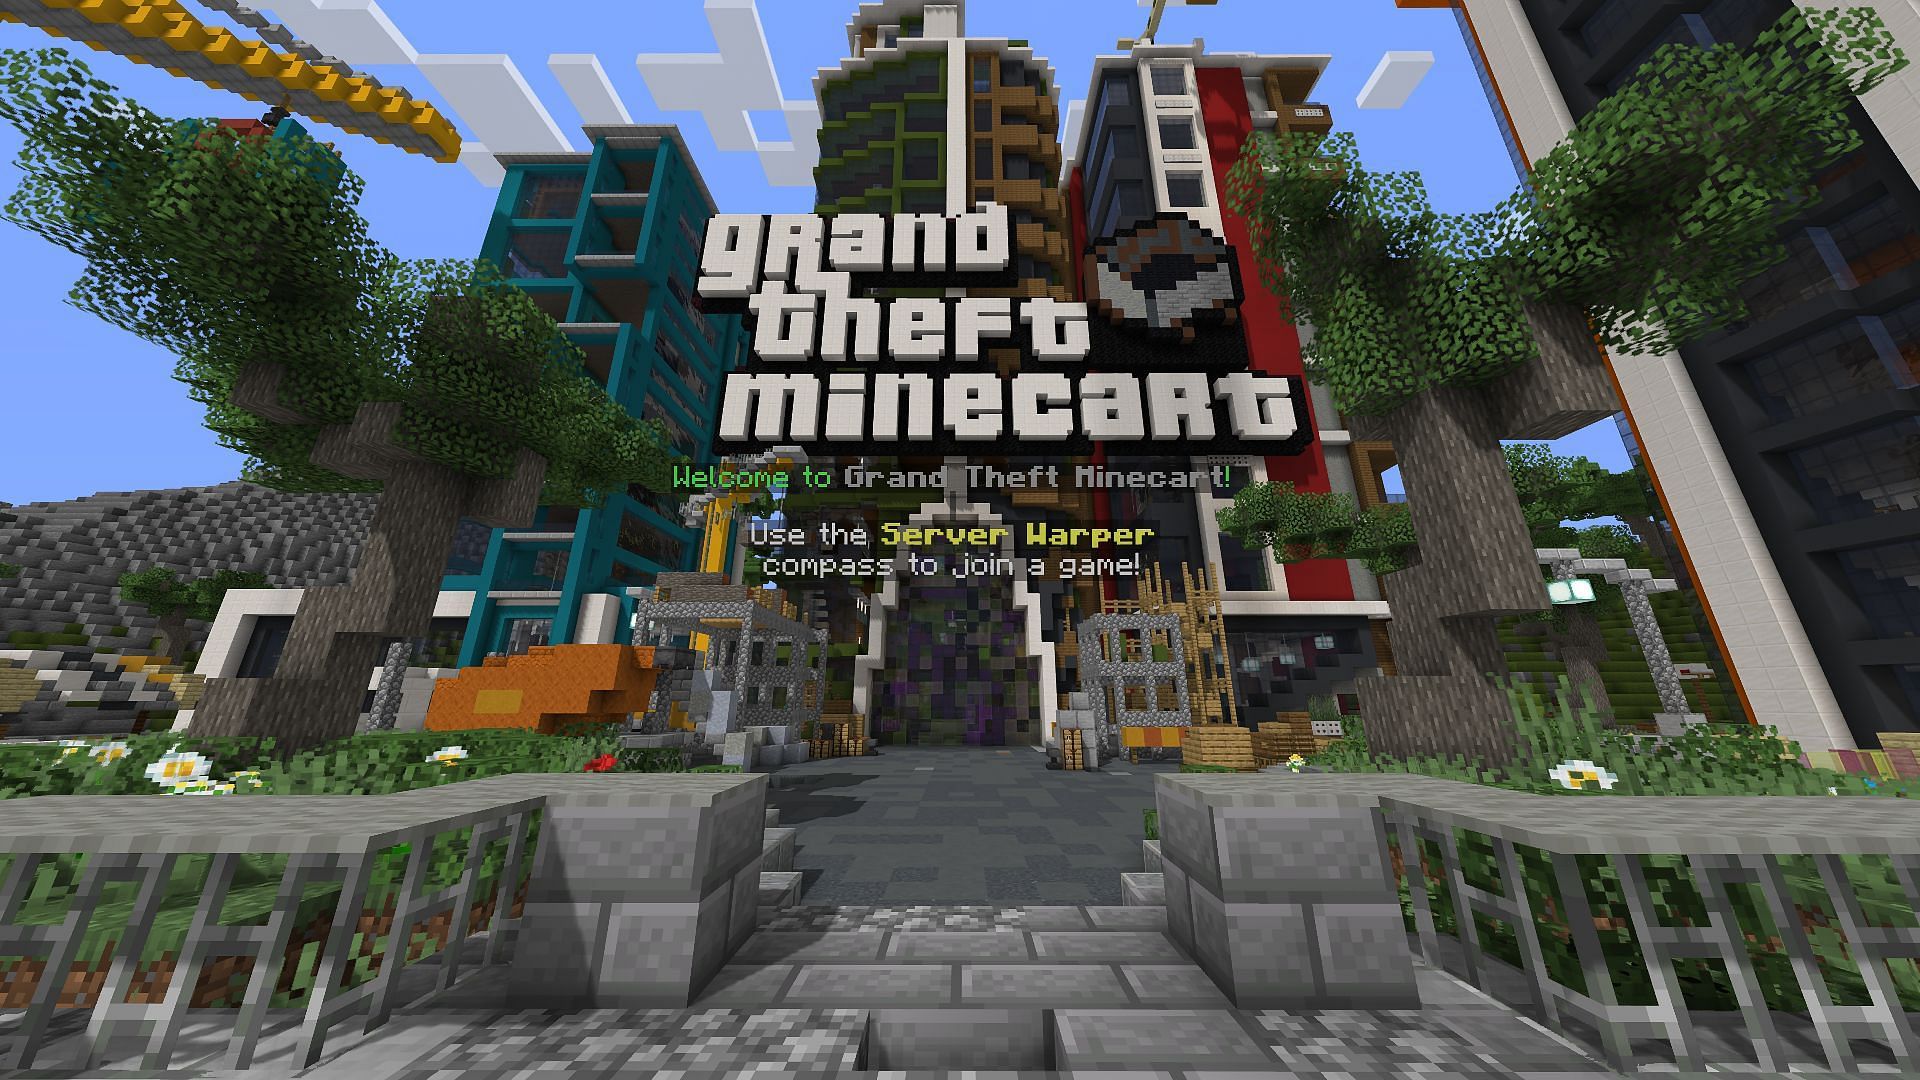 The Grand Theft Minecart spawn area (Image via Minecraft)